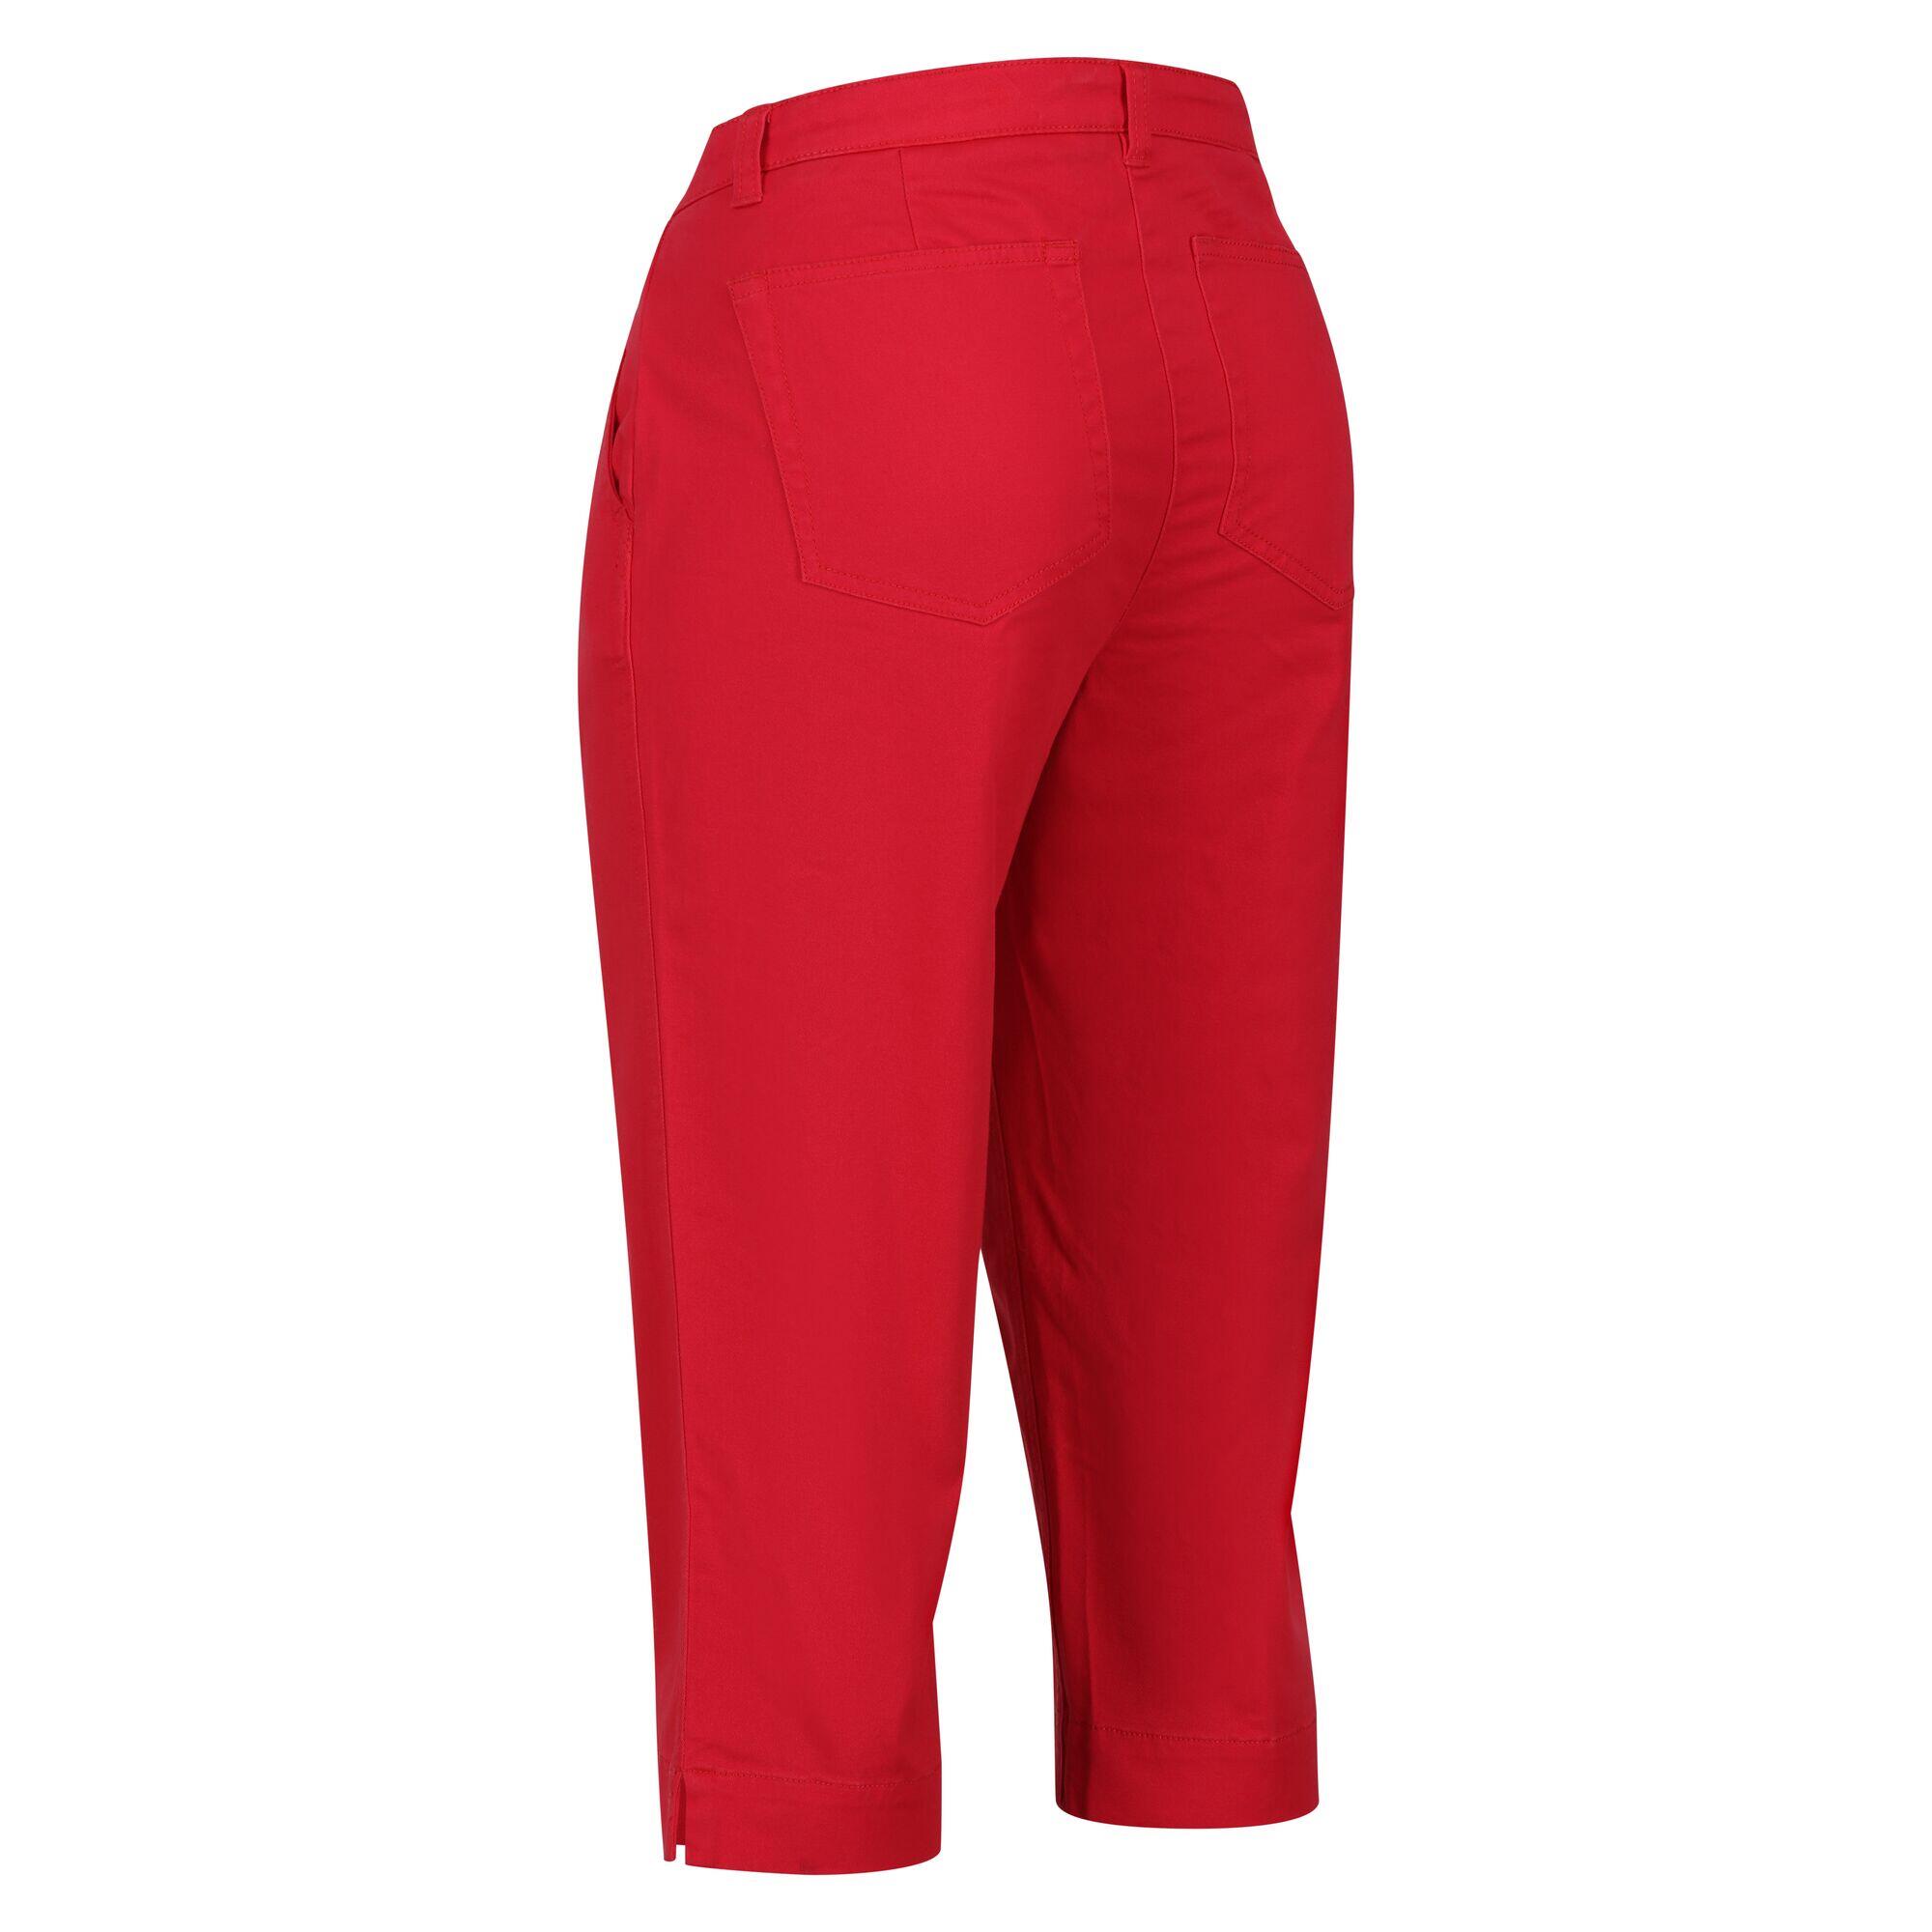 Red pants | Red pants, Pants, Fashion